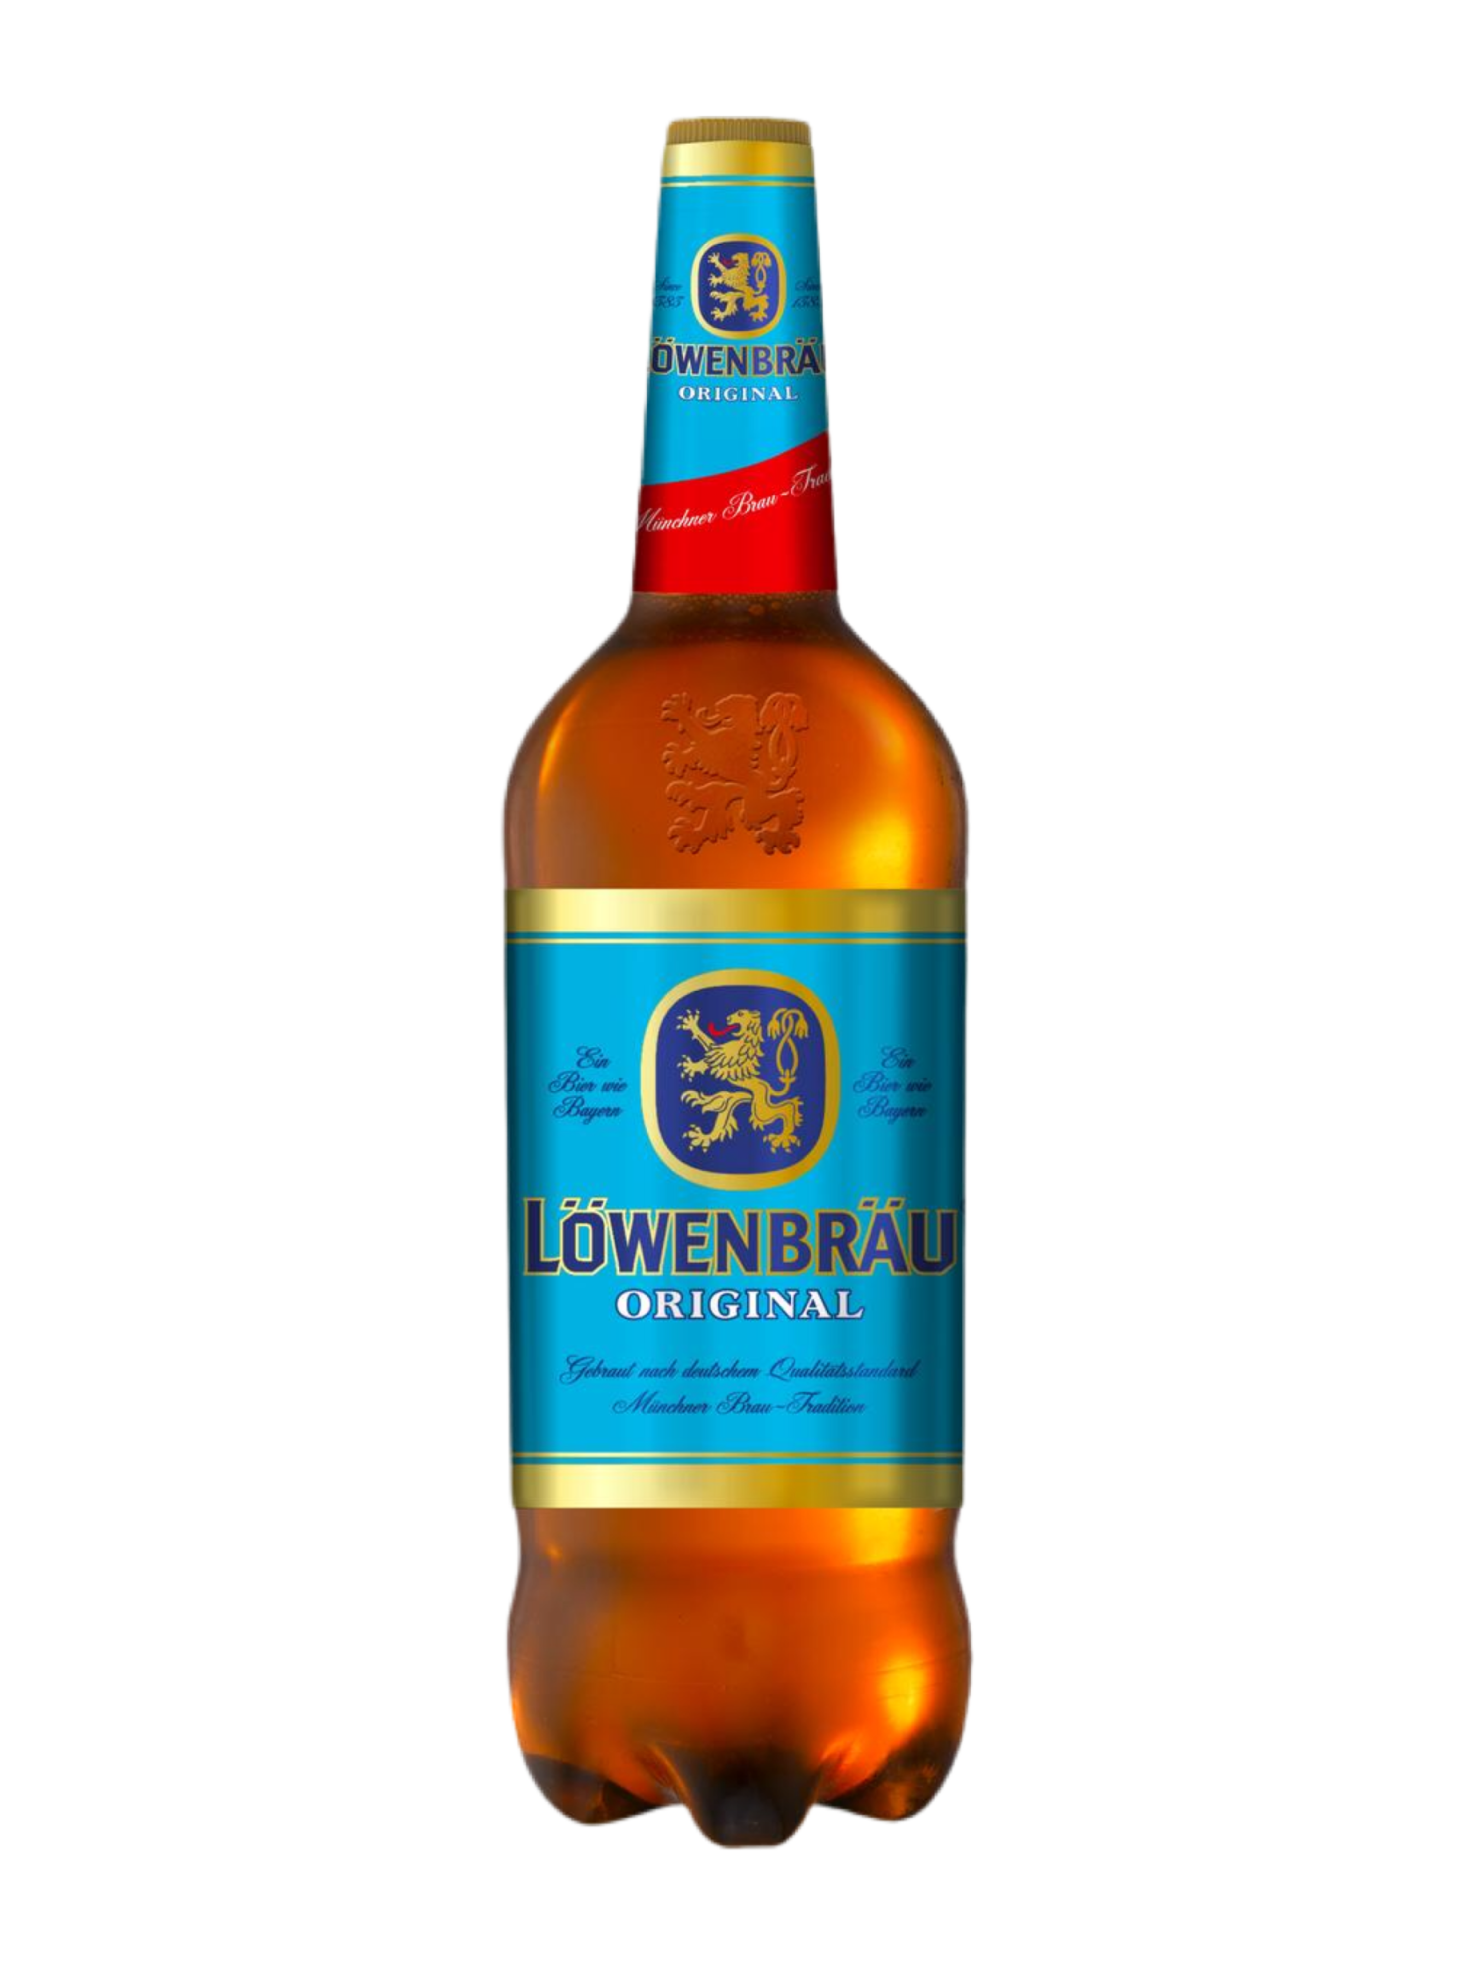 Пиво Ловенбрау св. 5,4% ПЭТ 1,3л